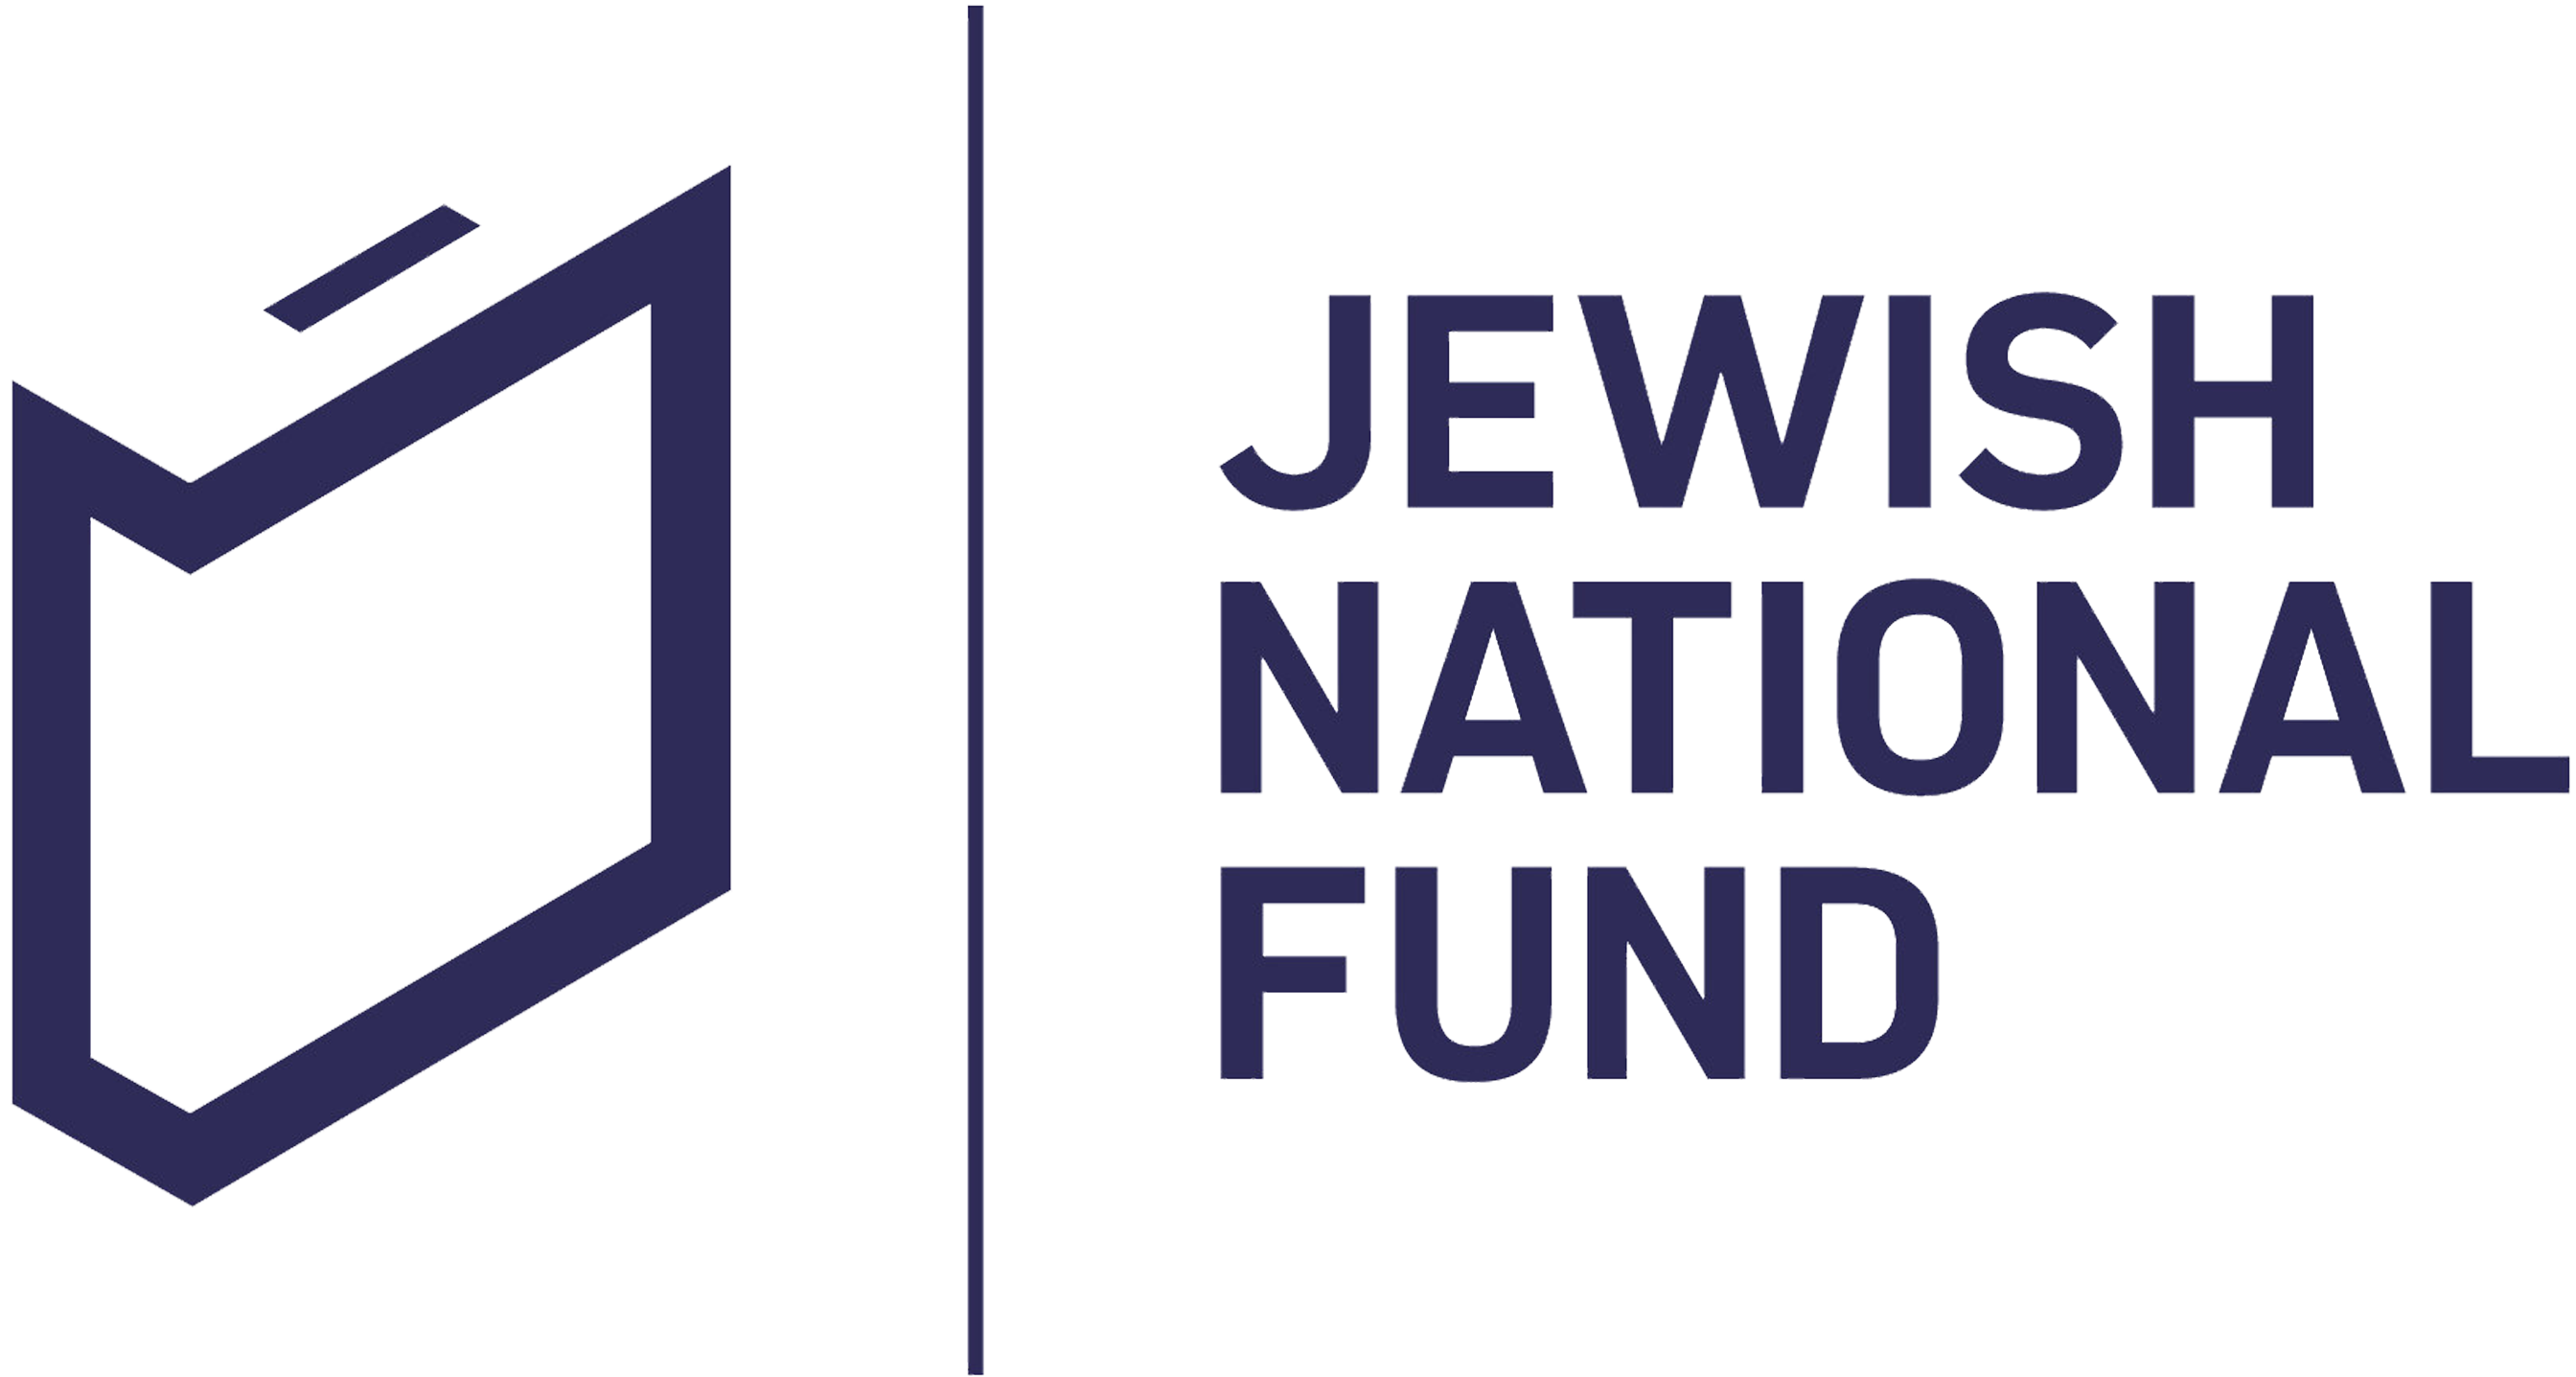 Jewish National Fund logo